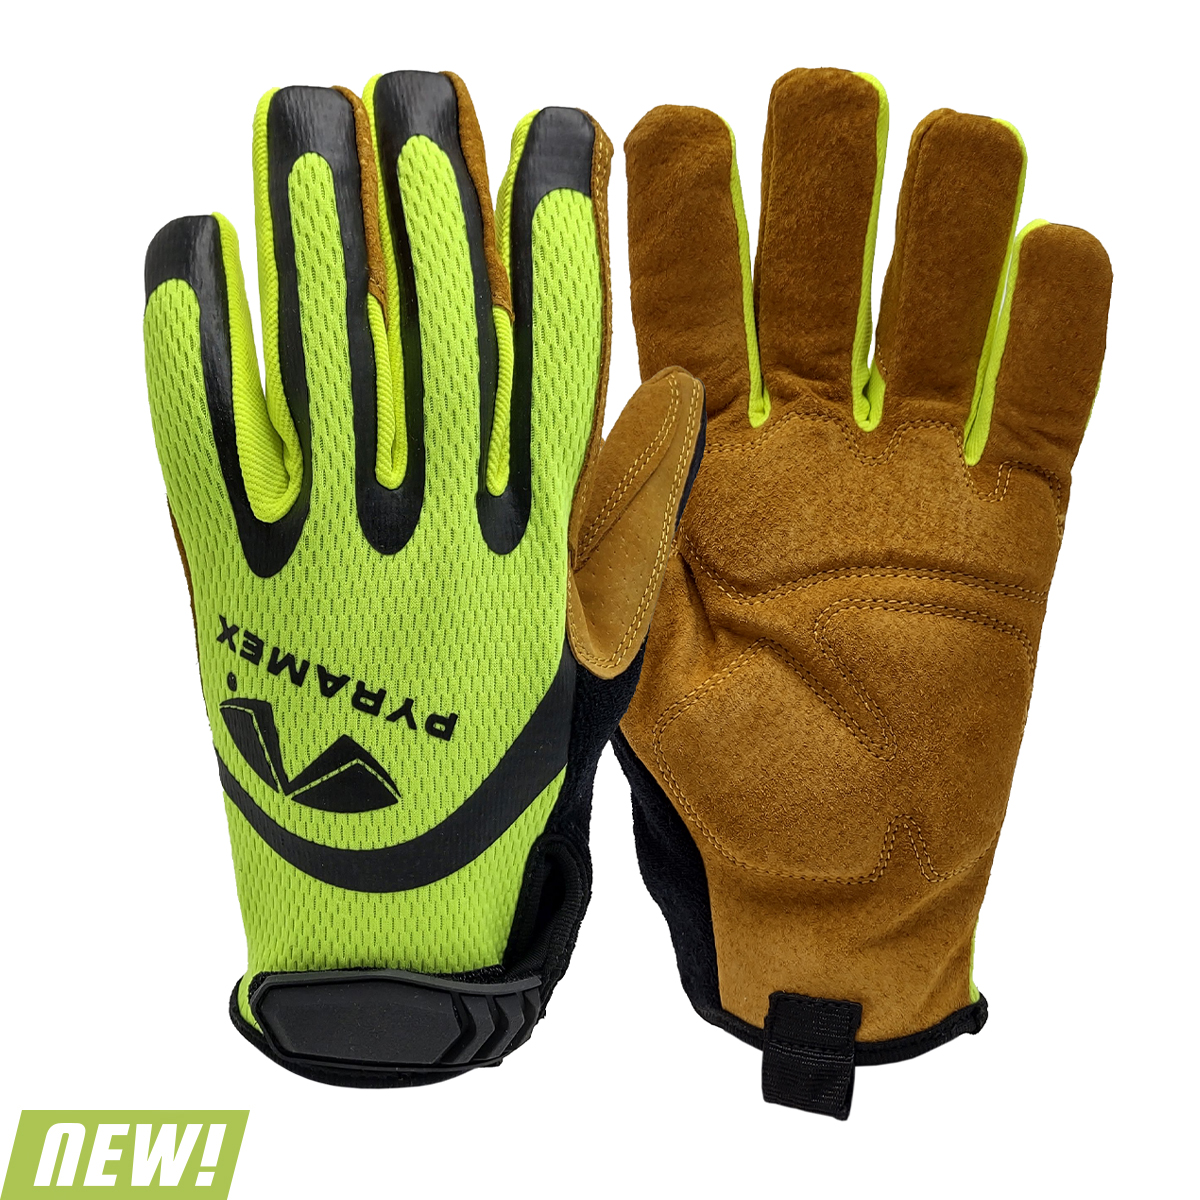 Get Pyramex High Performance Mechanics Gloves